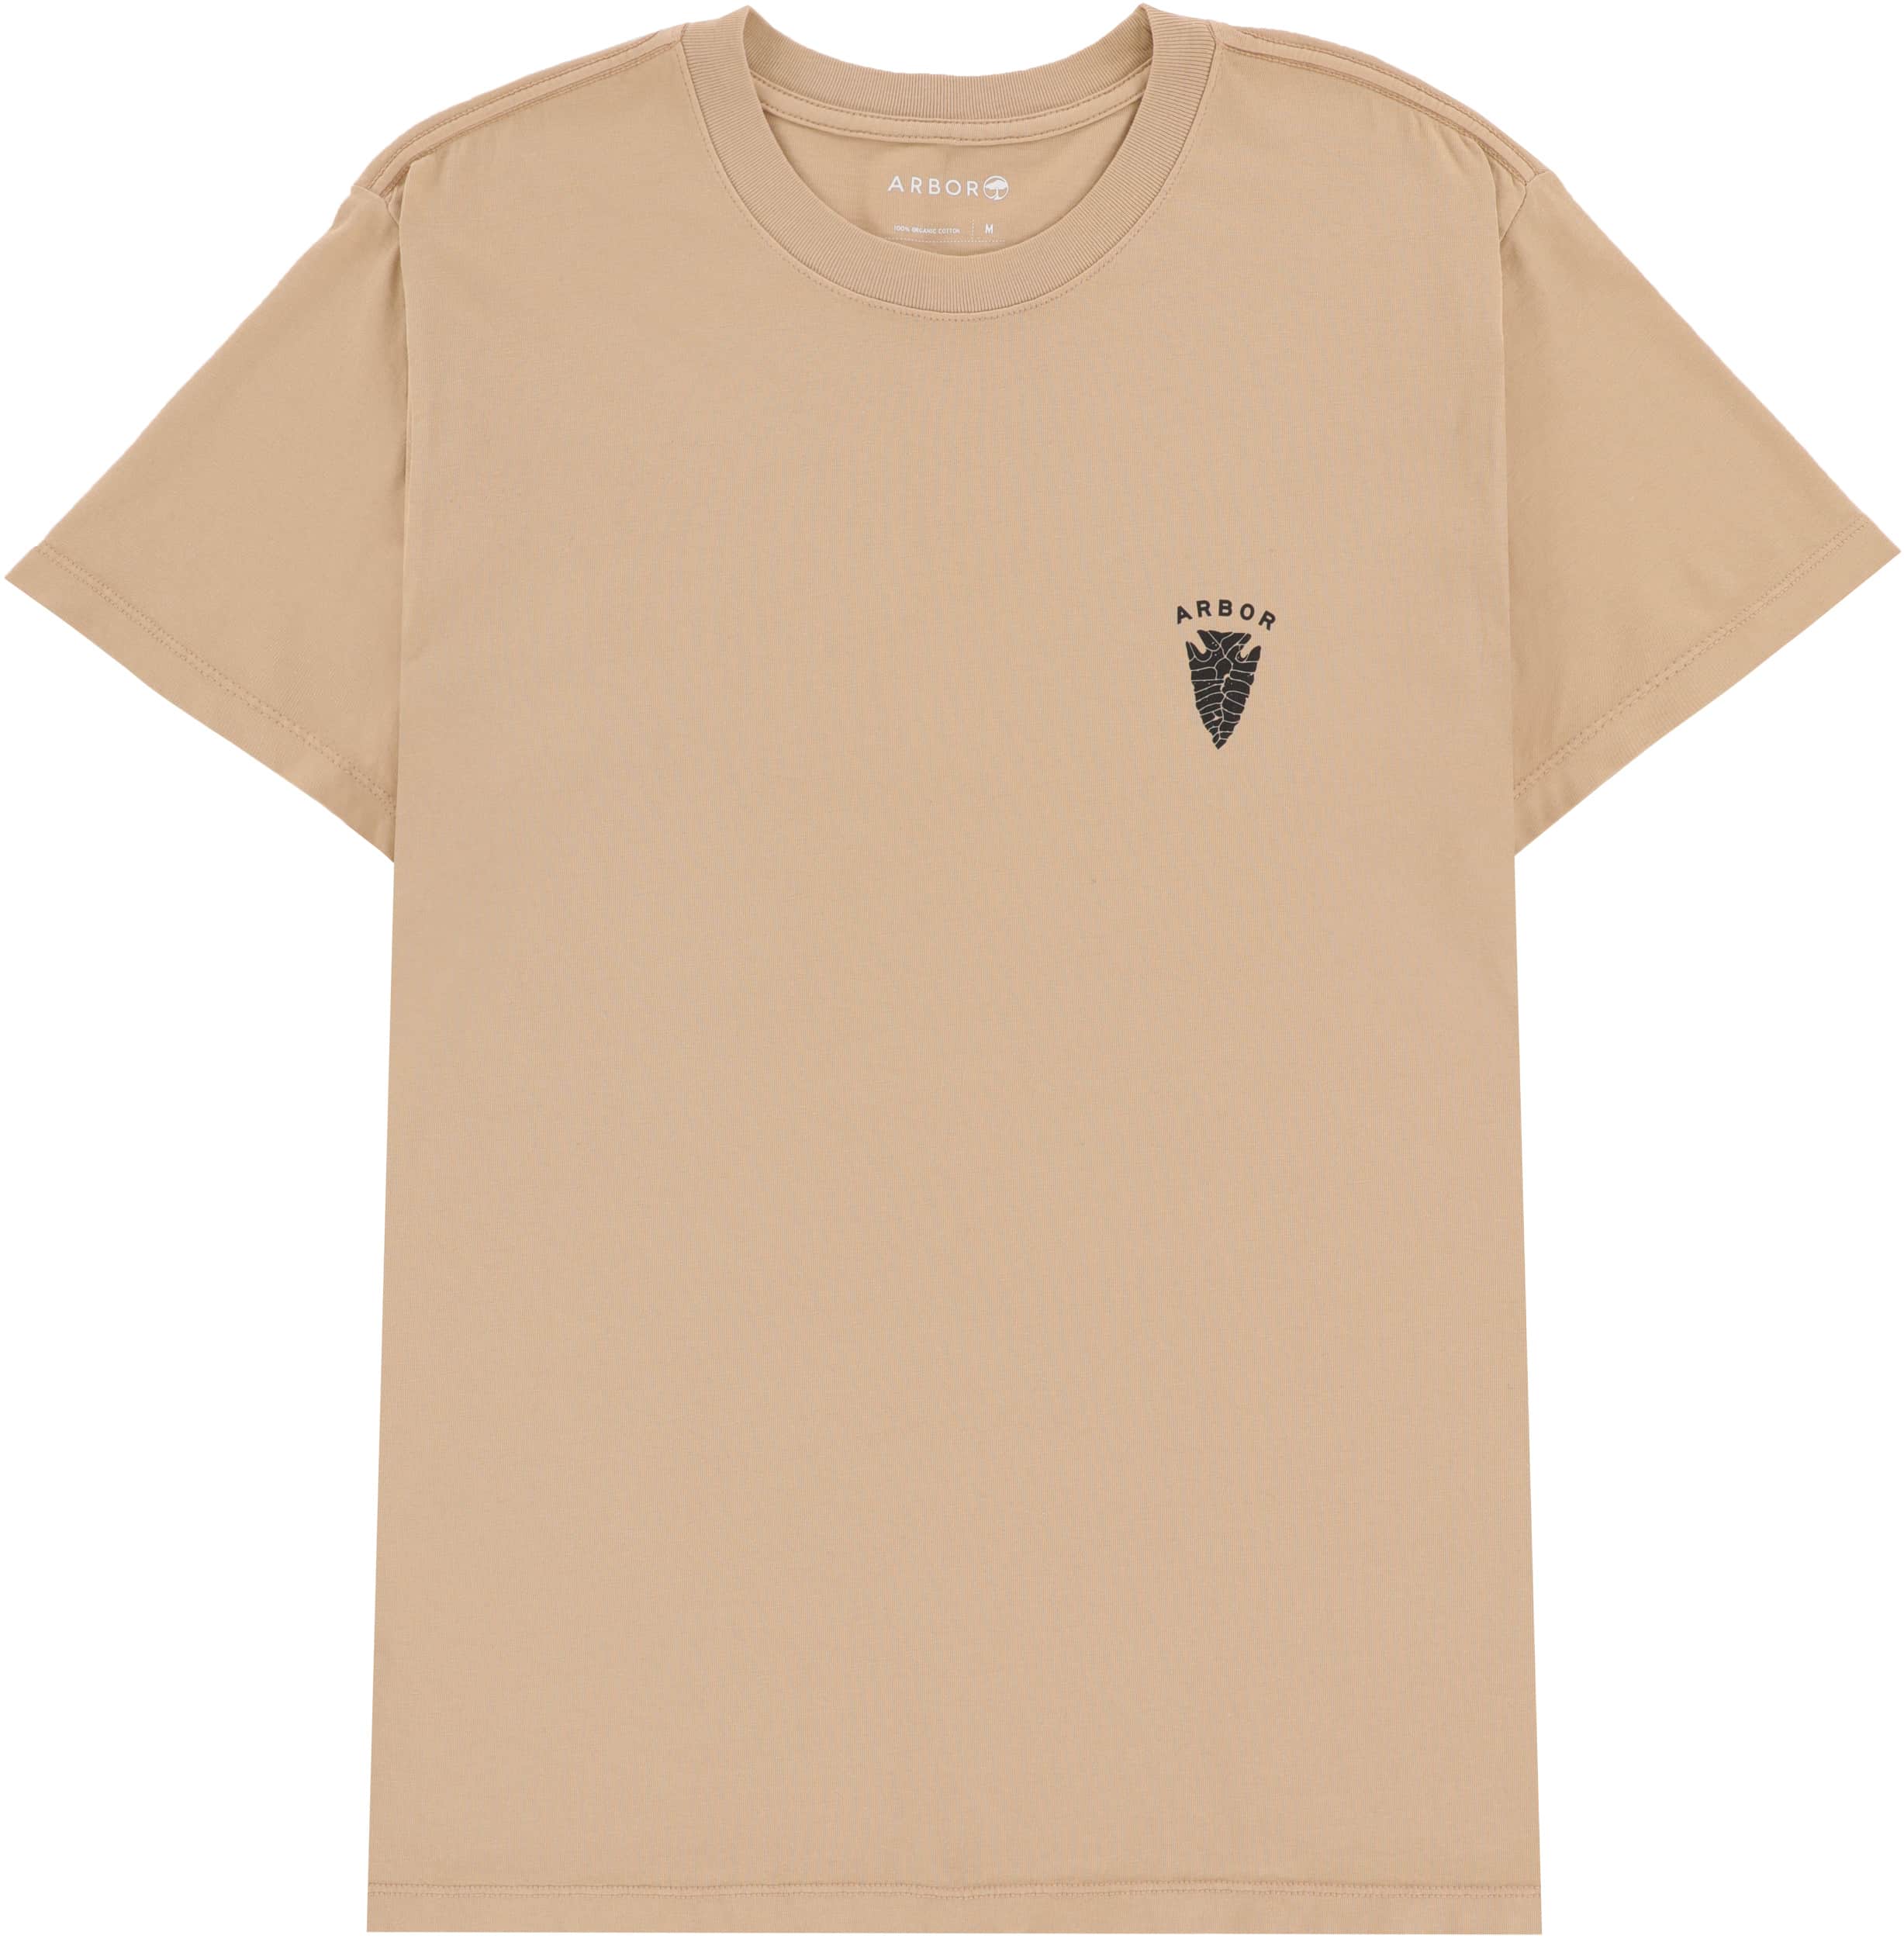 Arbor Range T-Shirt - sand | Tactics